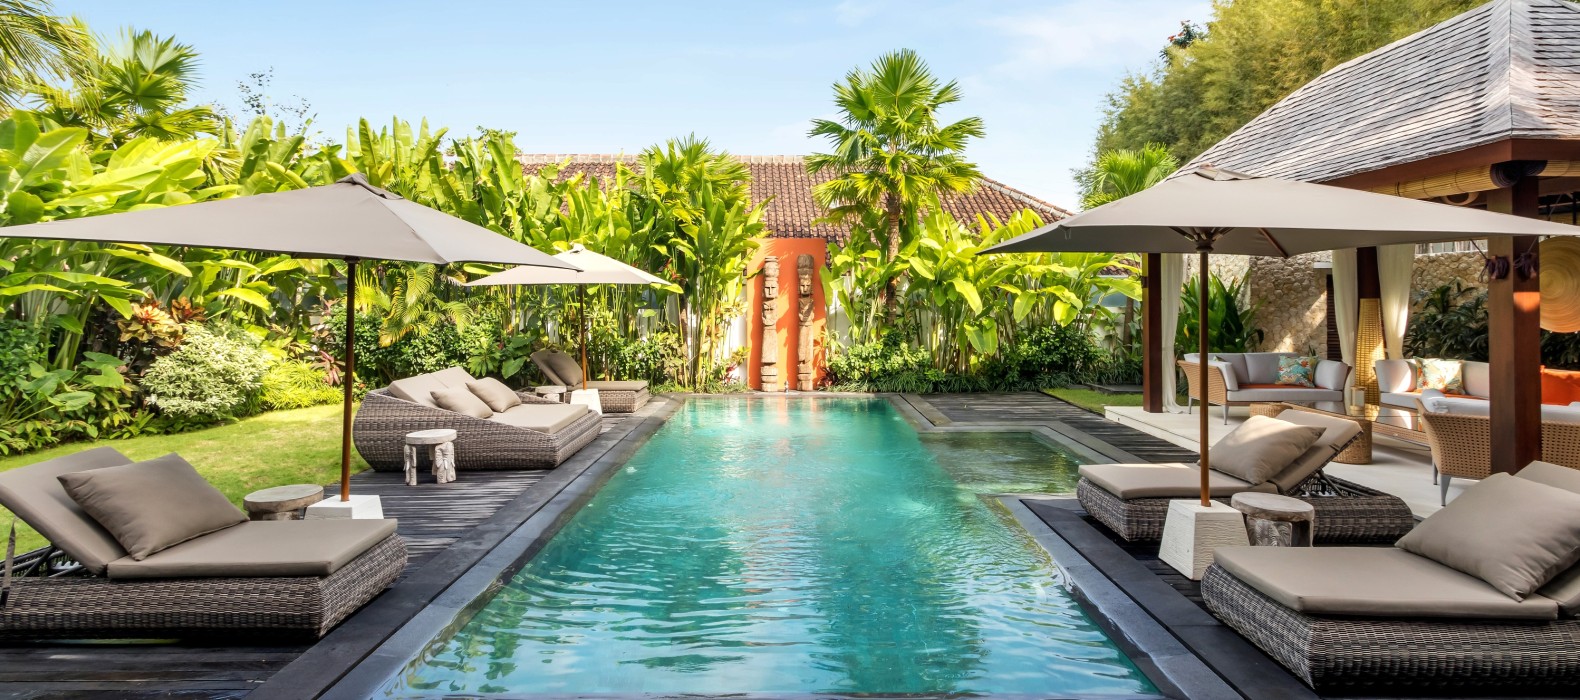 Exterior pool view of Villa Sundance in Bali